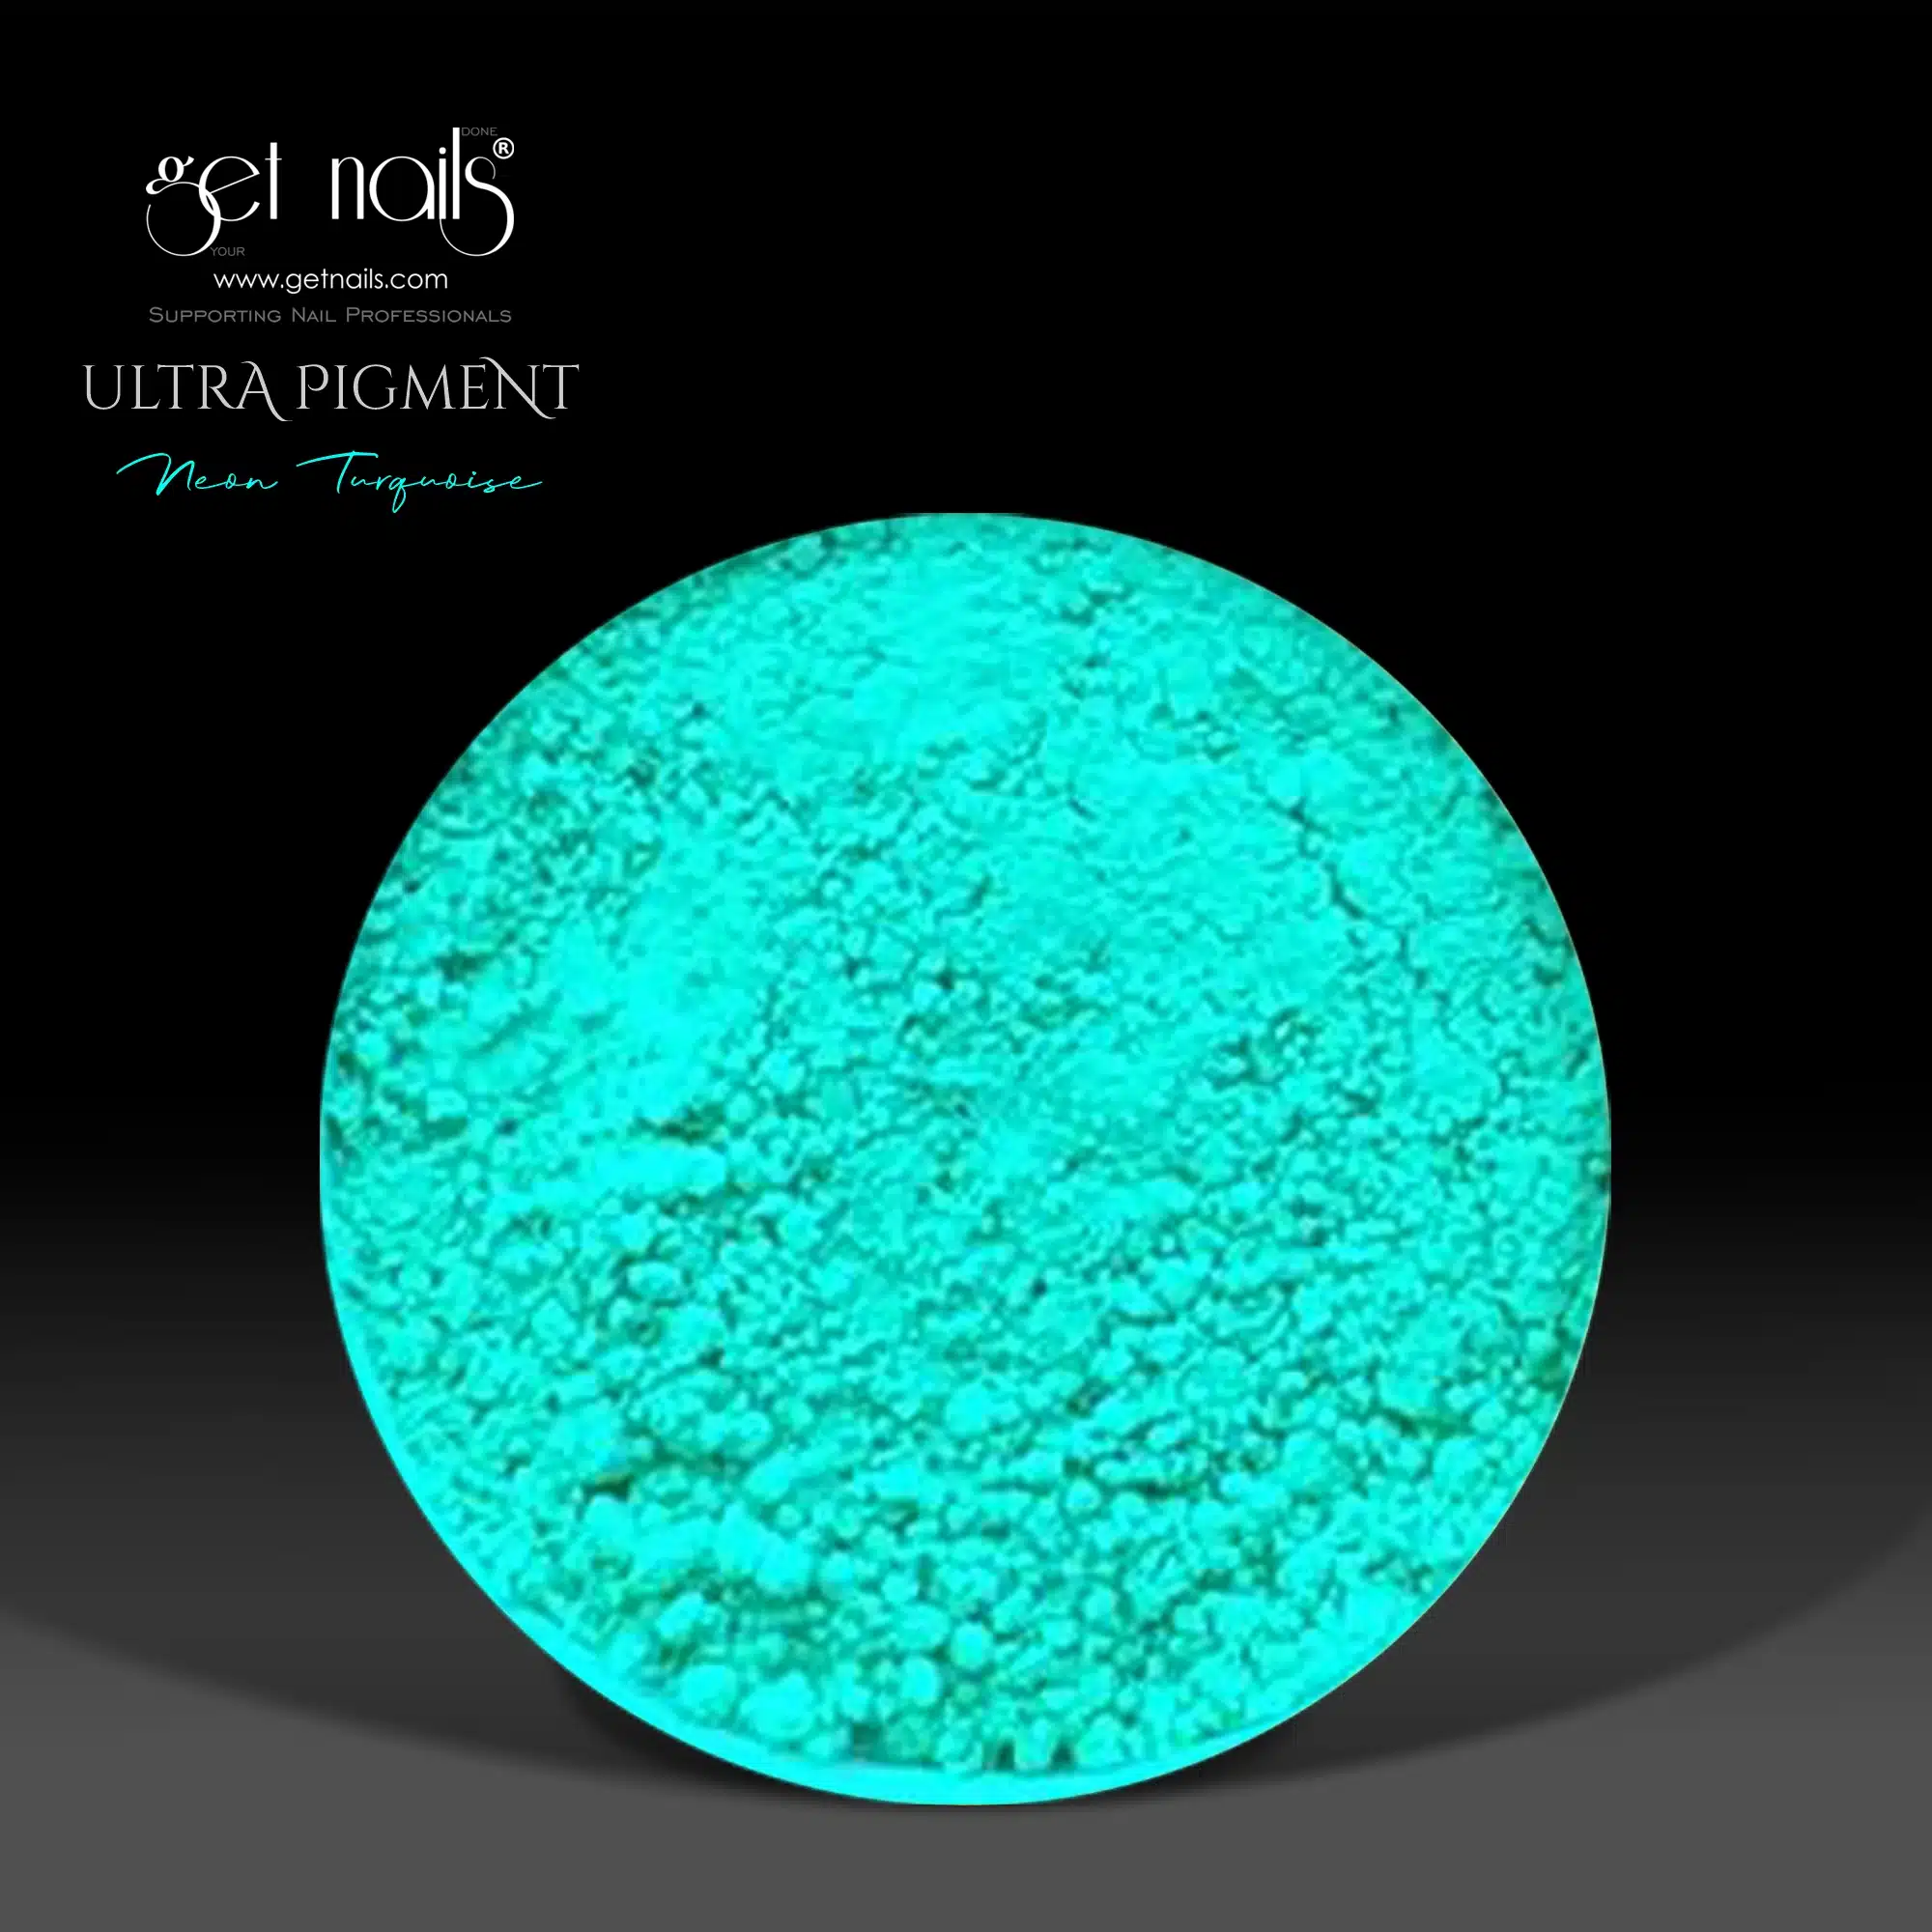 Get Nails Austria - Ultra Pigment Neon Turchese 1.5 g